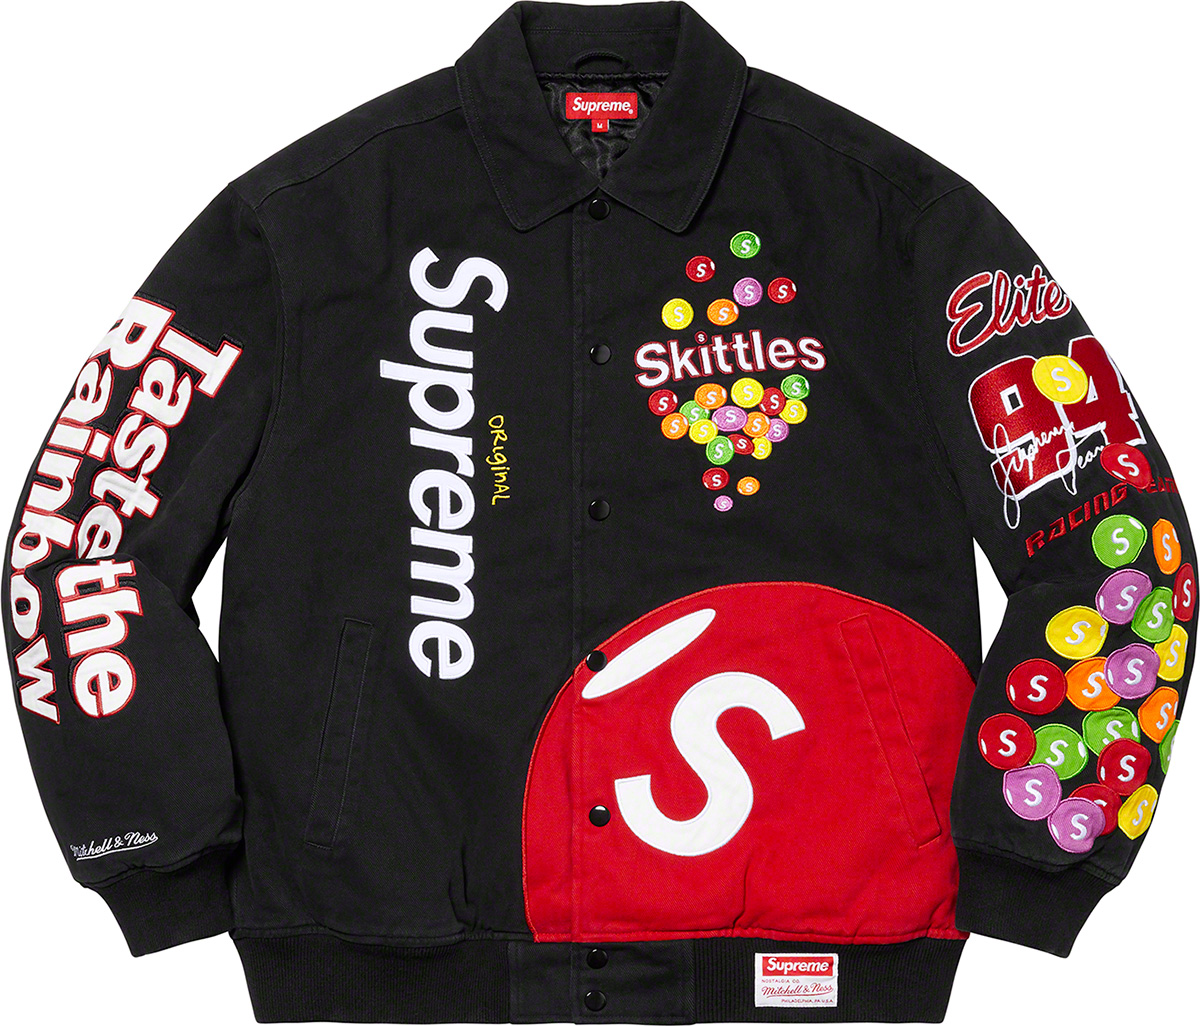 Supreme®/Skittles®/Mitchell & Ness® Varsity Jacket | Supreme - SLN